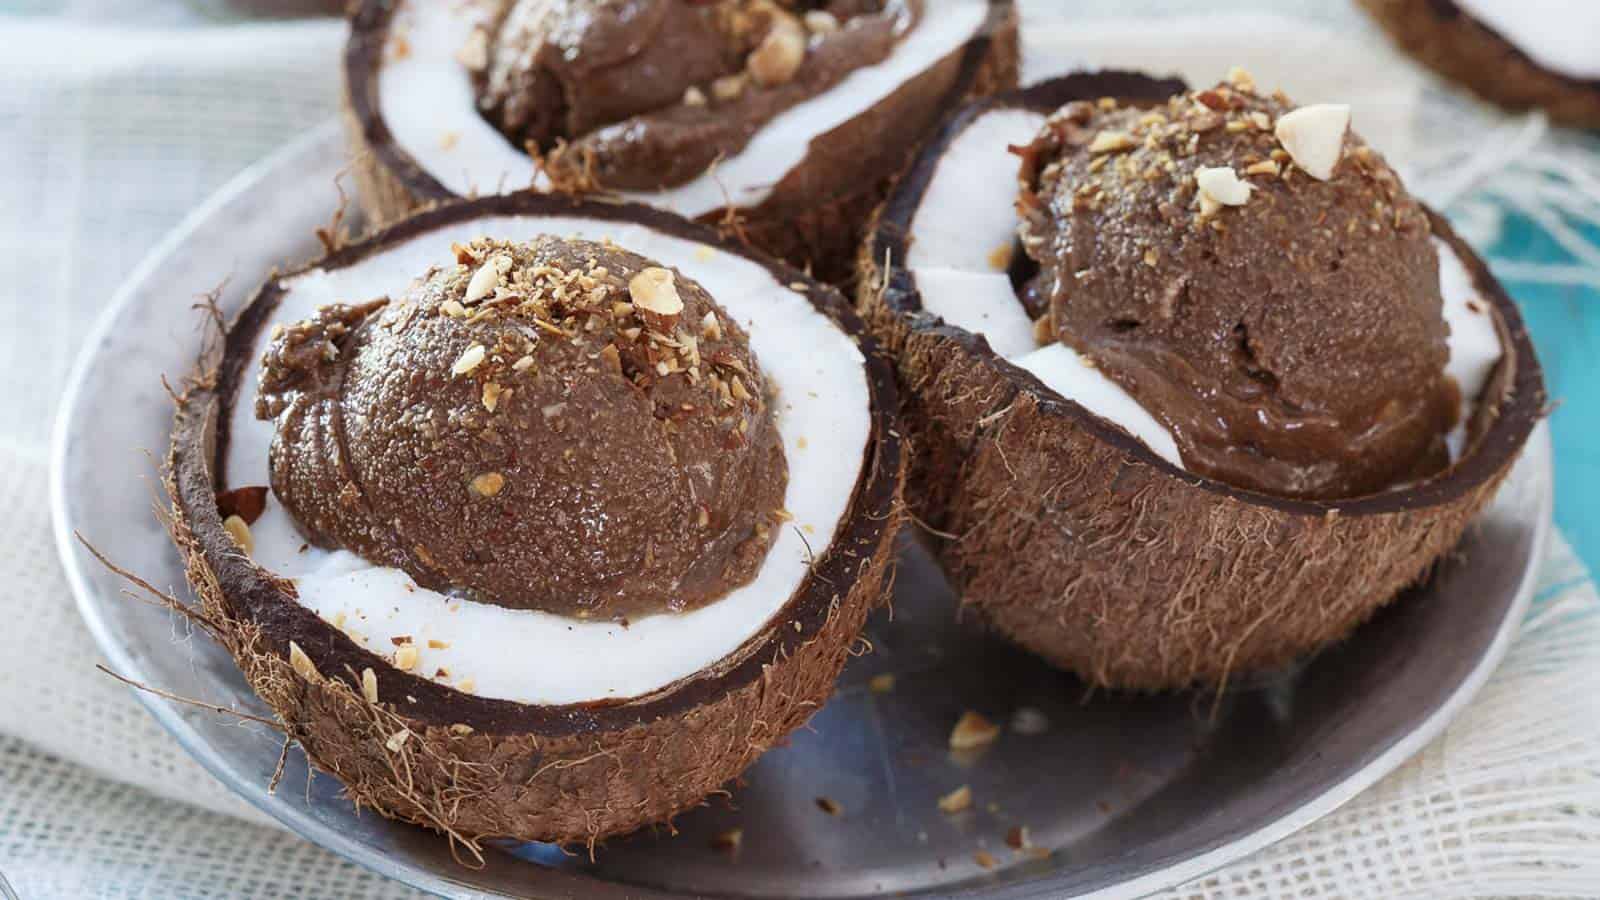 Chocolate coconut avocado ice cream in coconut shells.